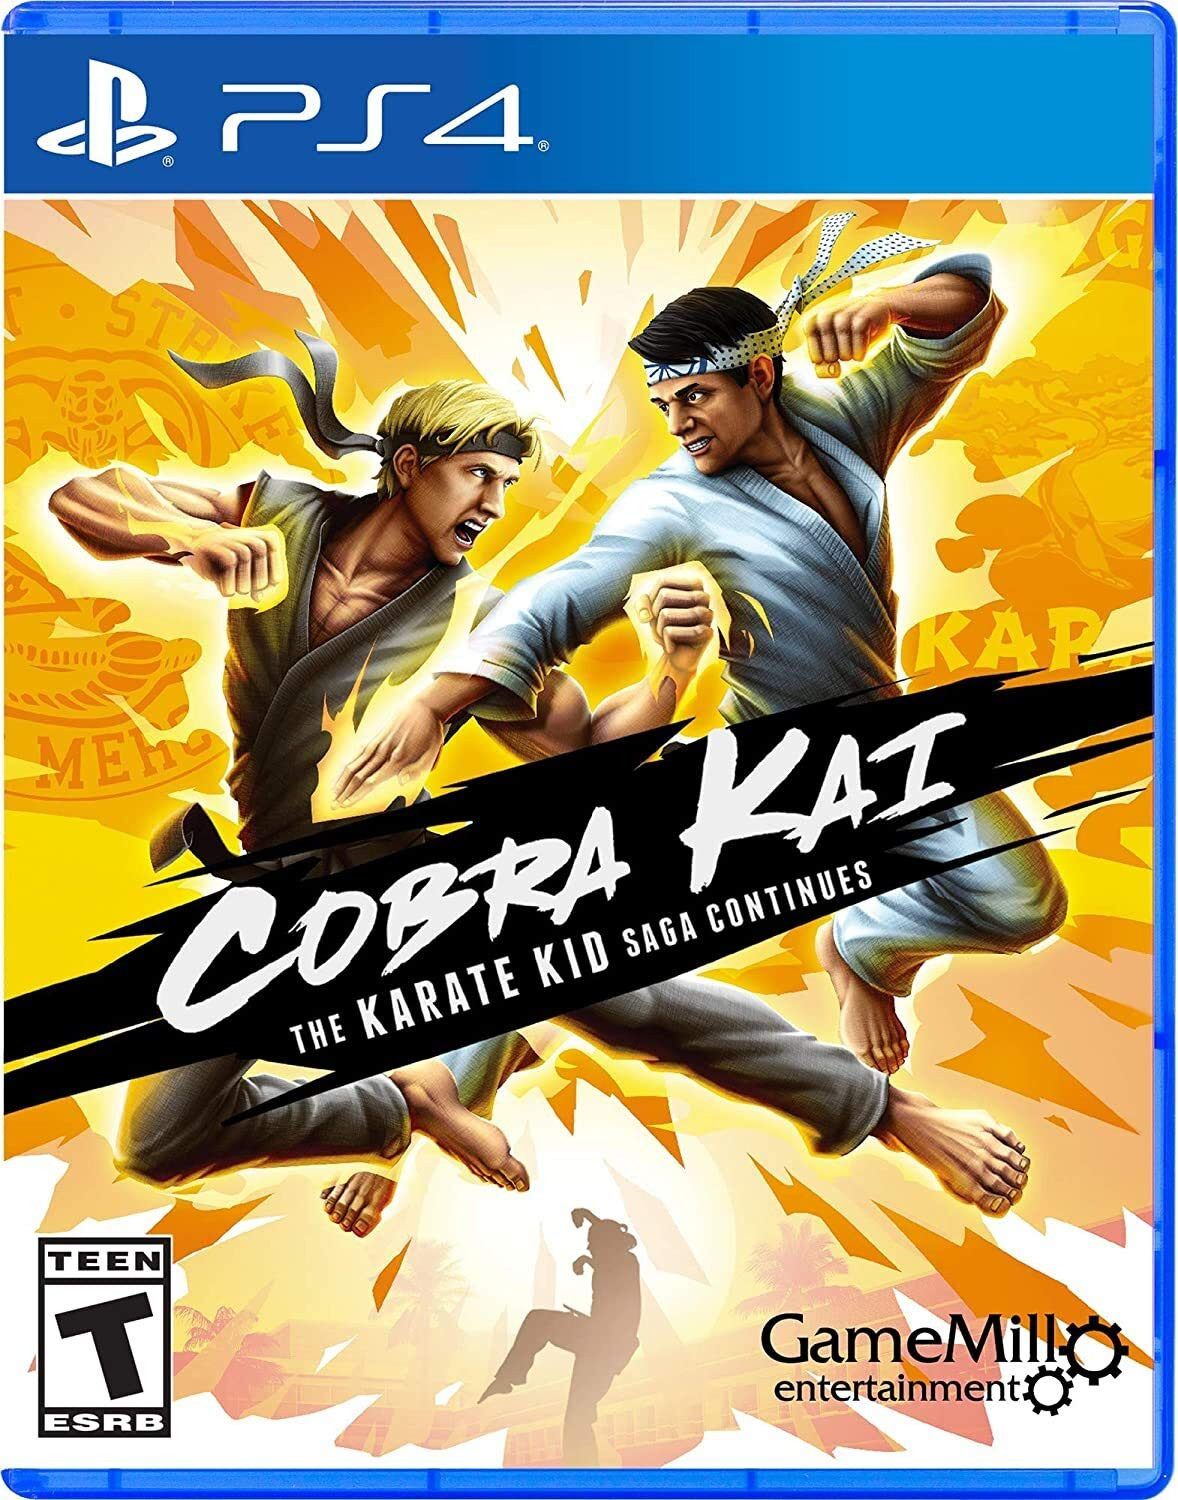 Cobra Kai the Karate Kid Saga Continues